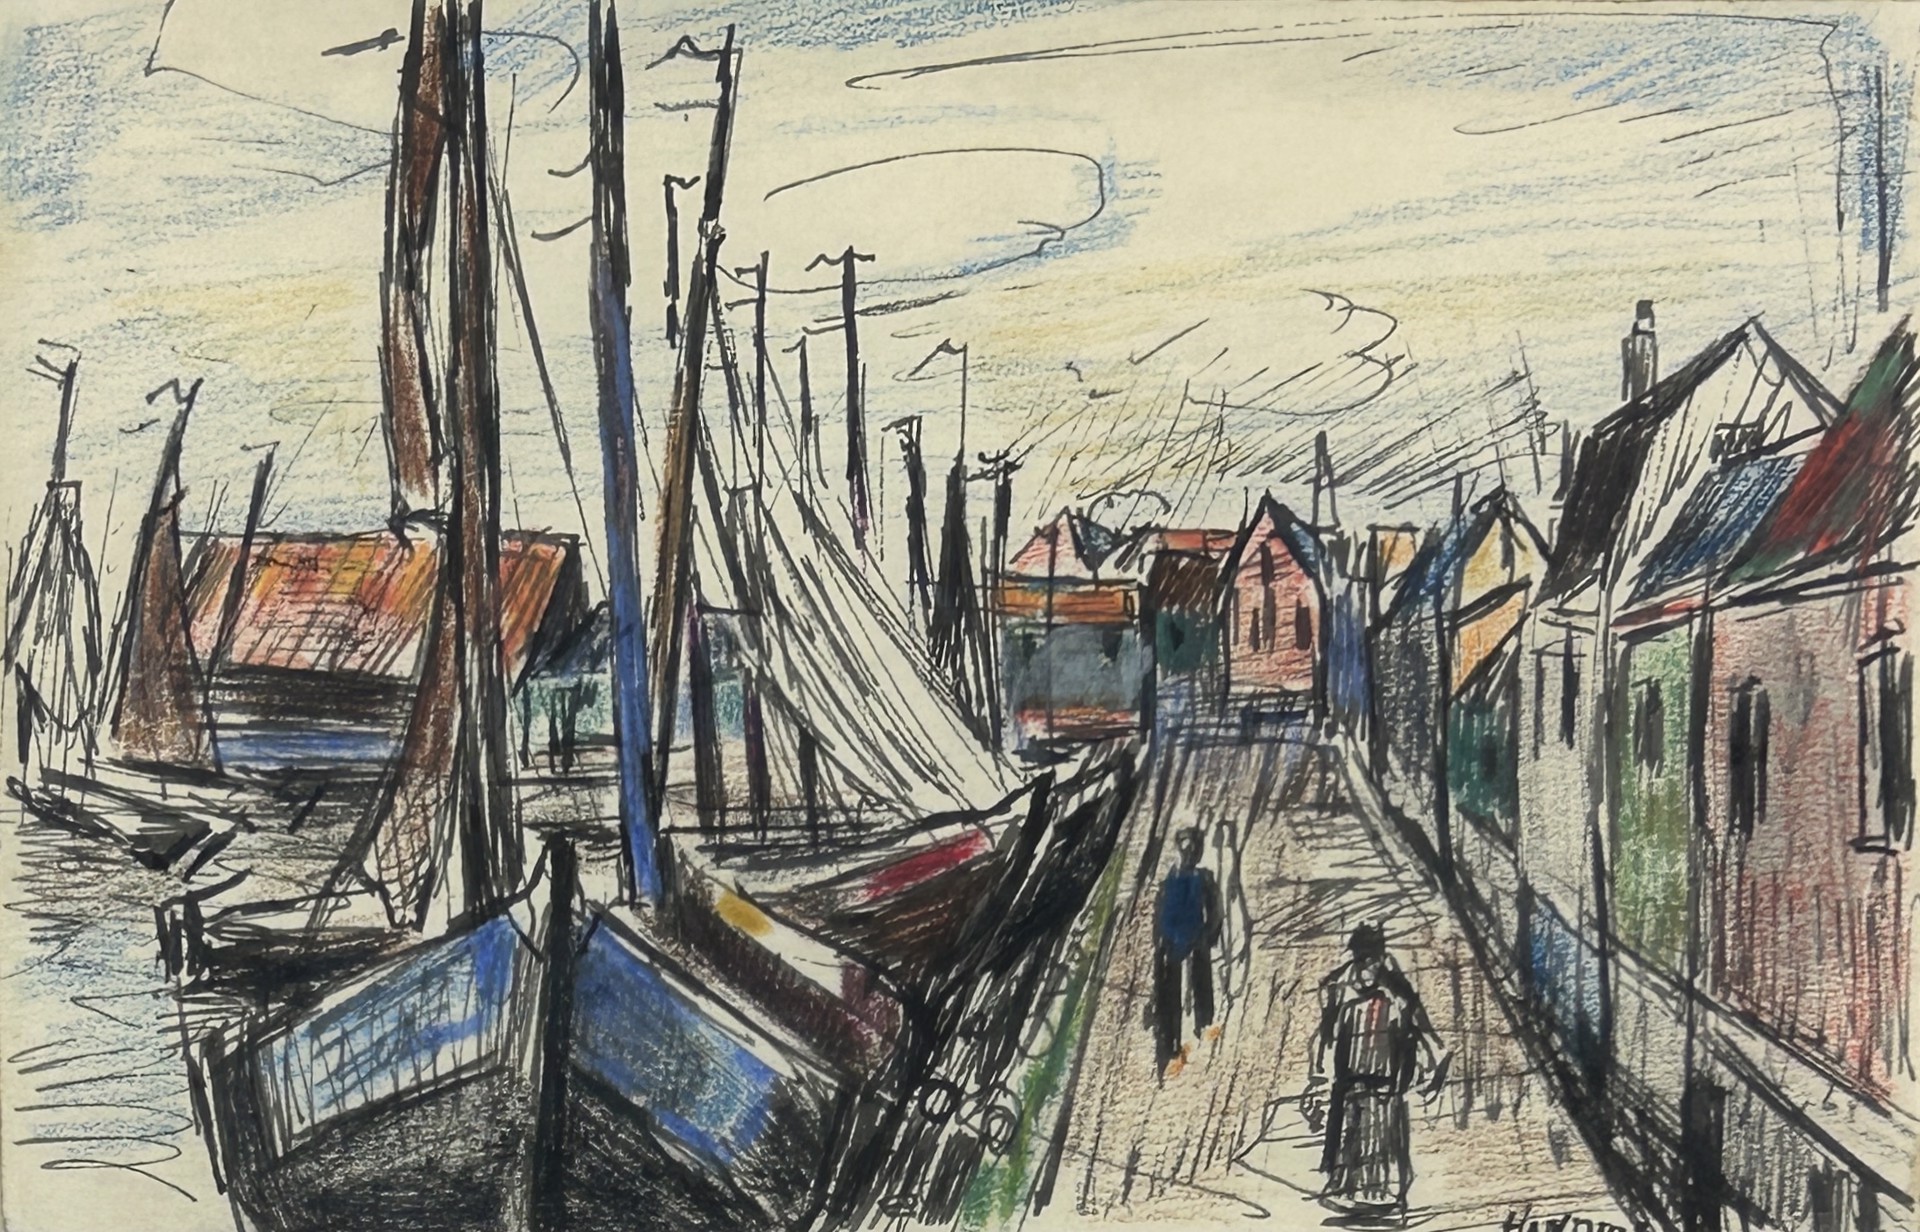 On the Wharf by Gerrit Hondius